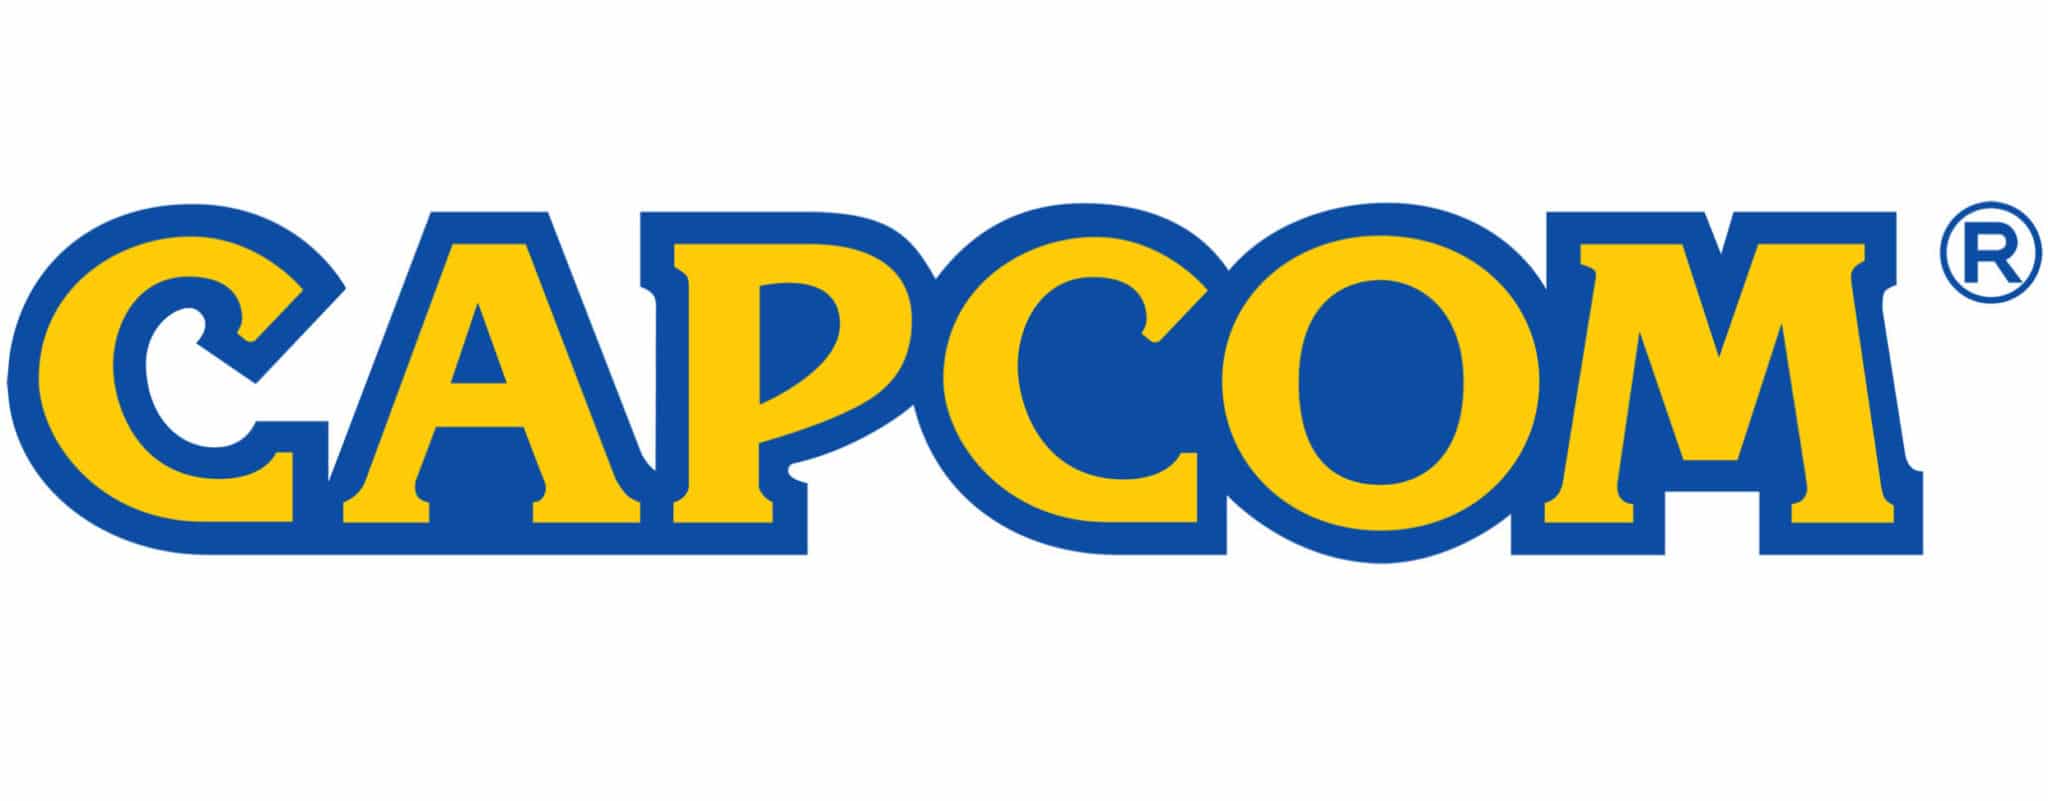 Capcom chiude lo store online negli USA 2